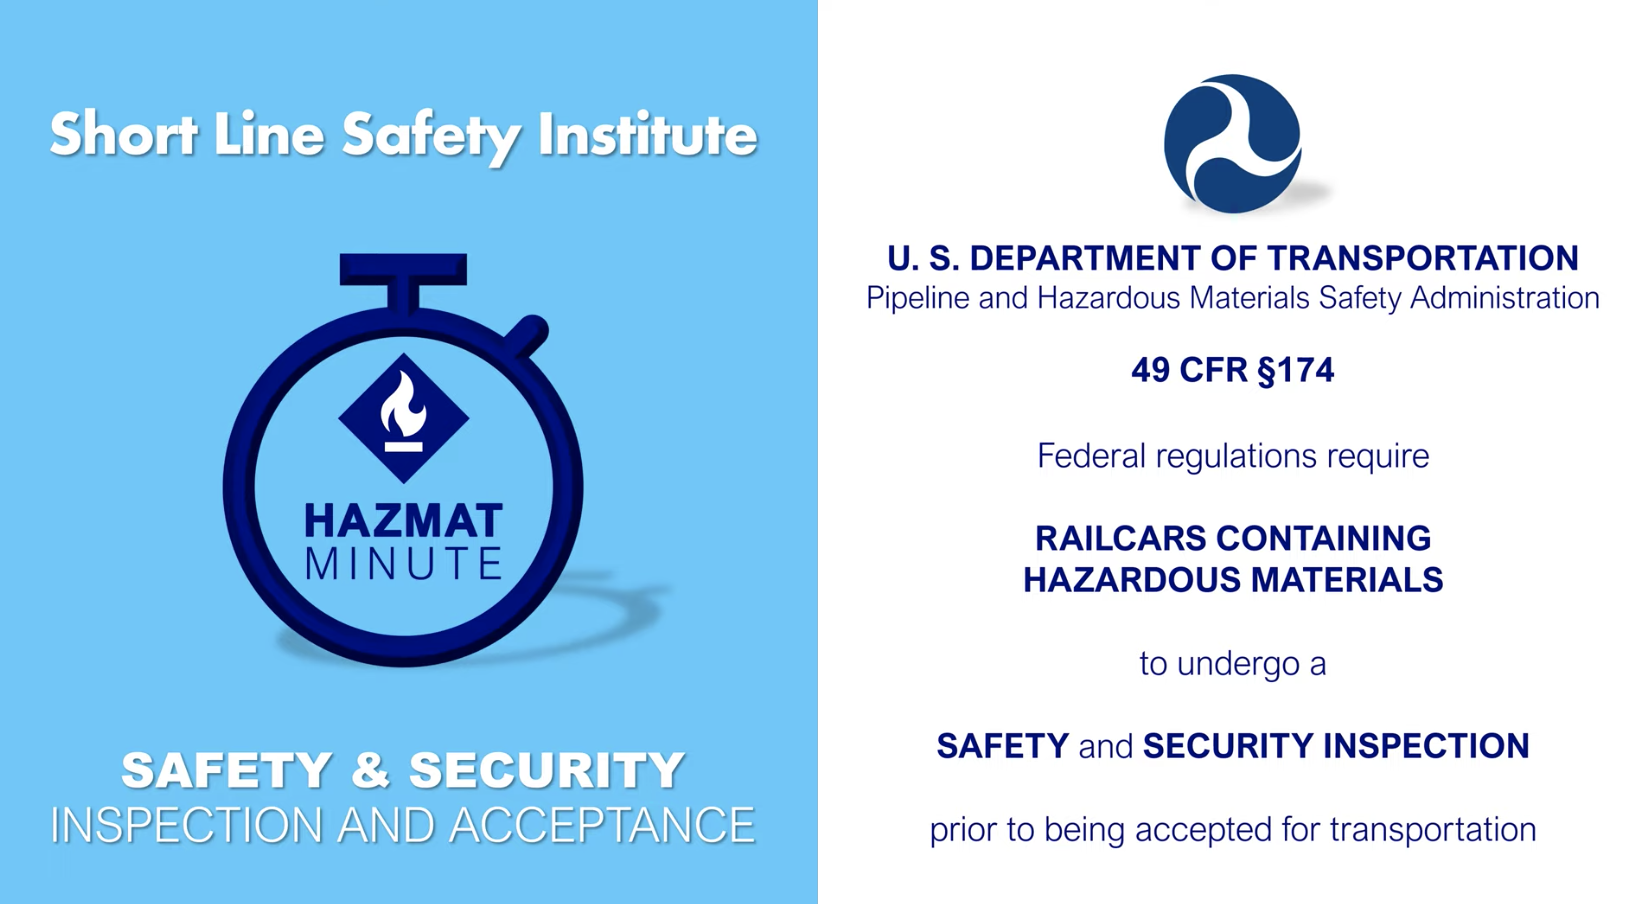 HM-SafetySecurityInspectAccept